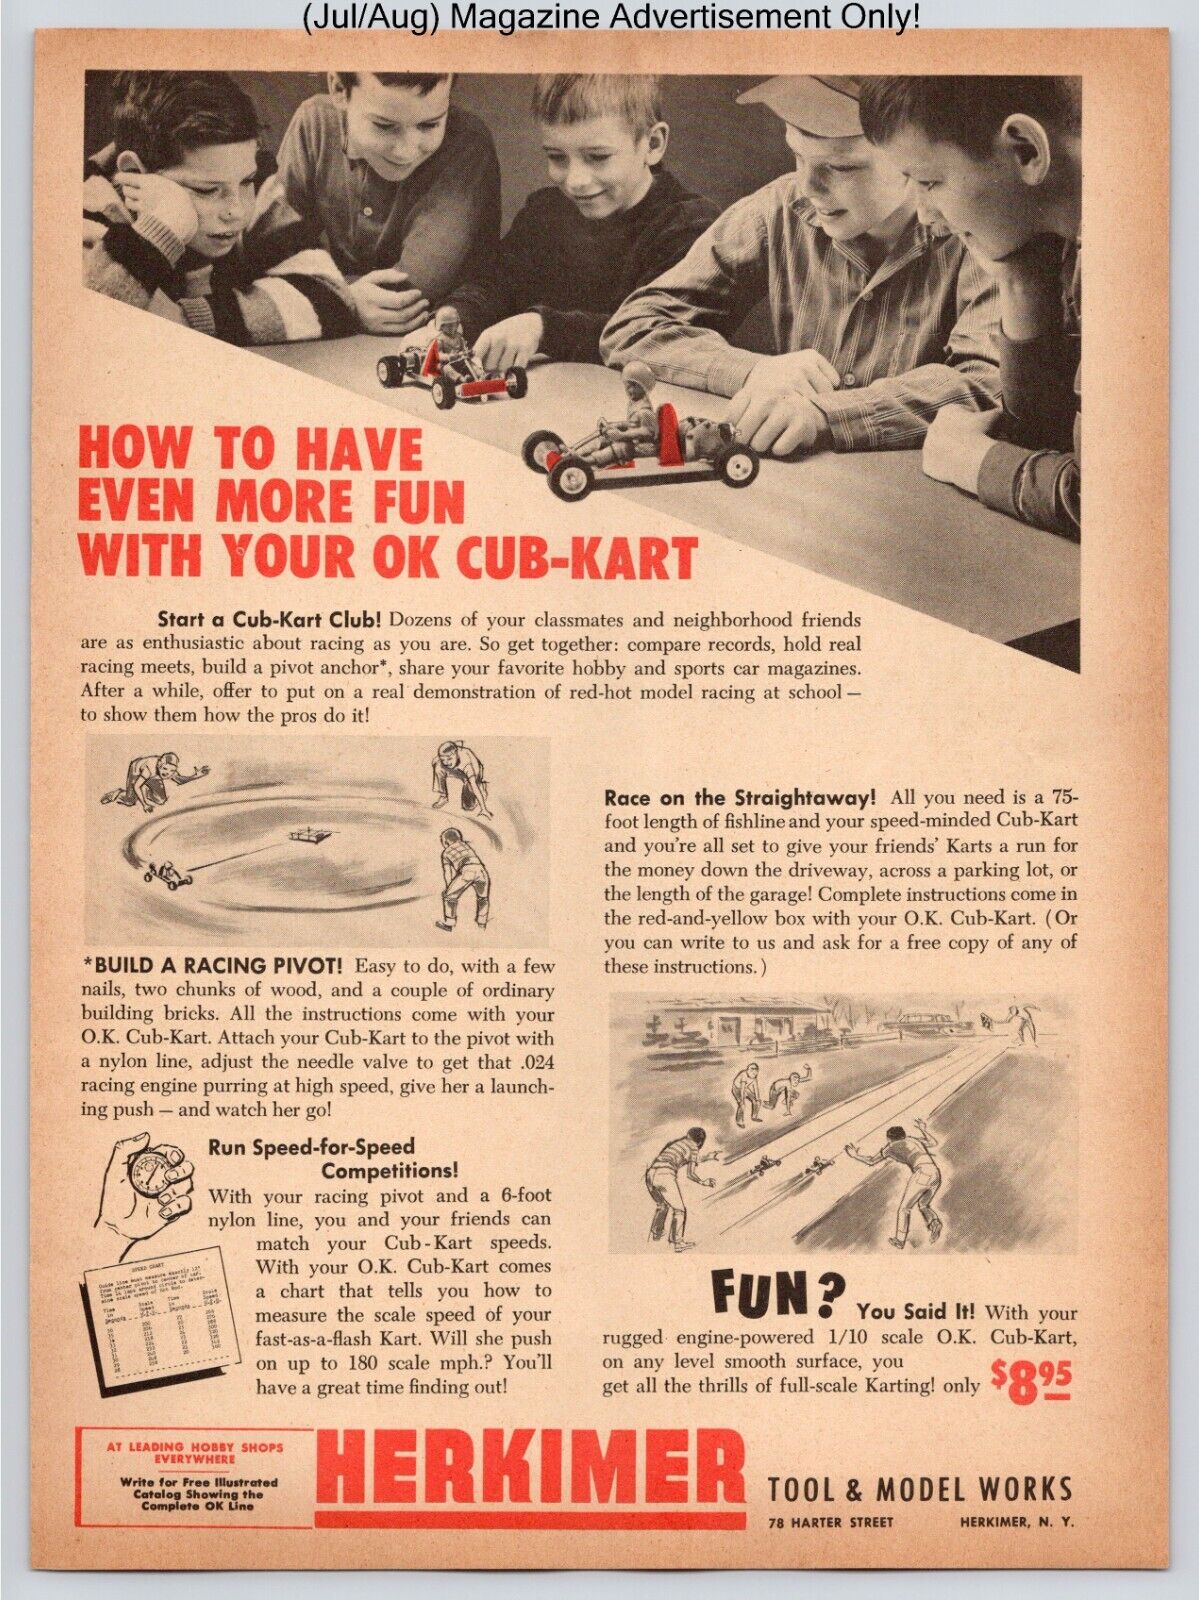 Herkimer Tool & Model Works OK Cub-Kart Promo Vintage 1963 Full Page Print Ad